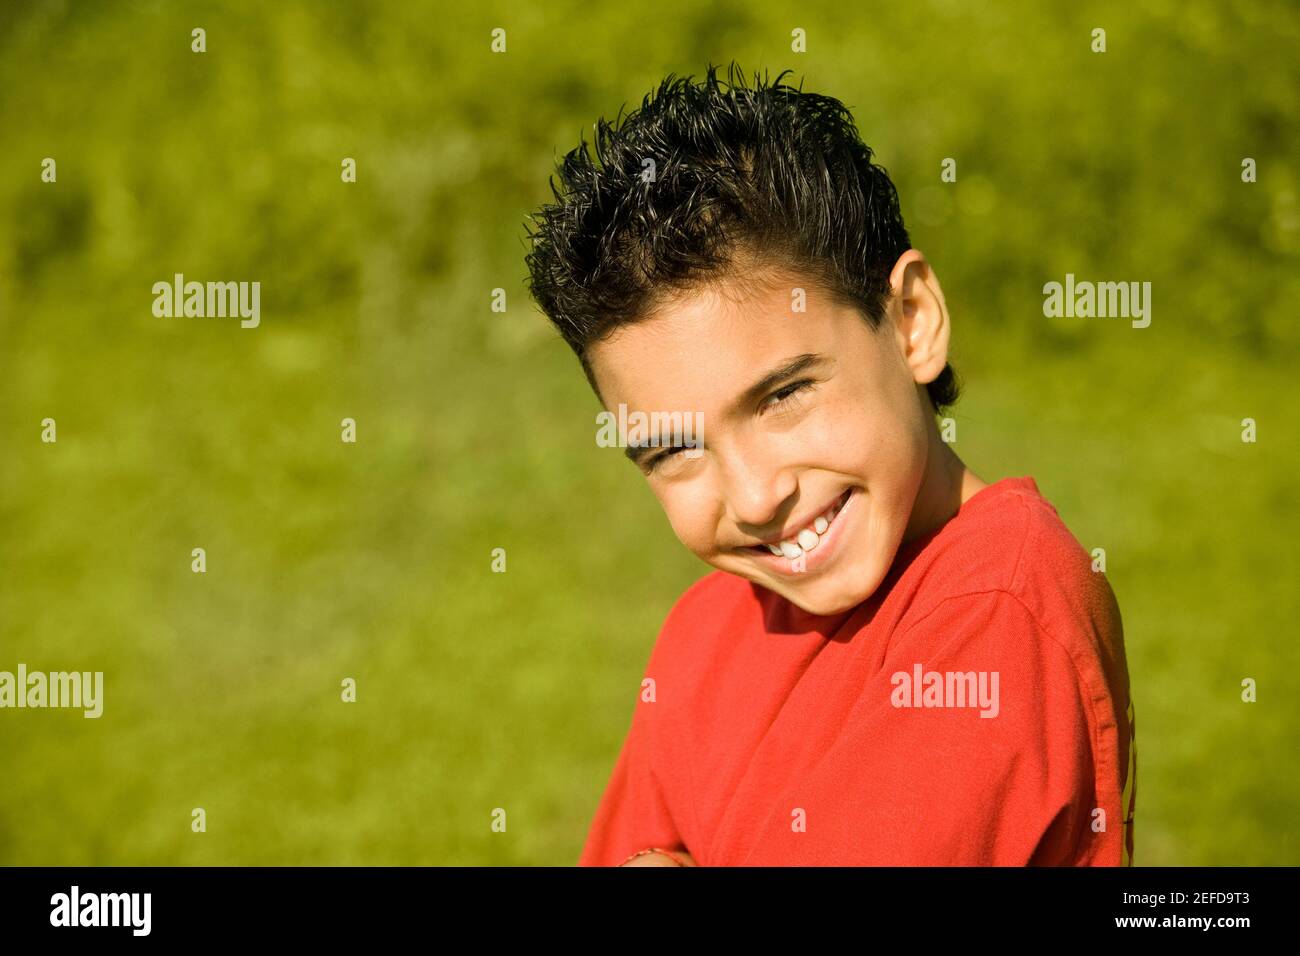 Portrait of a boy smiling Stock Photo